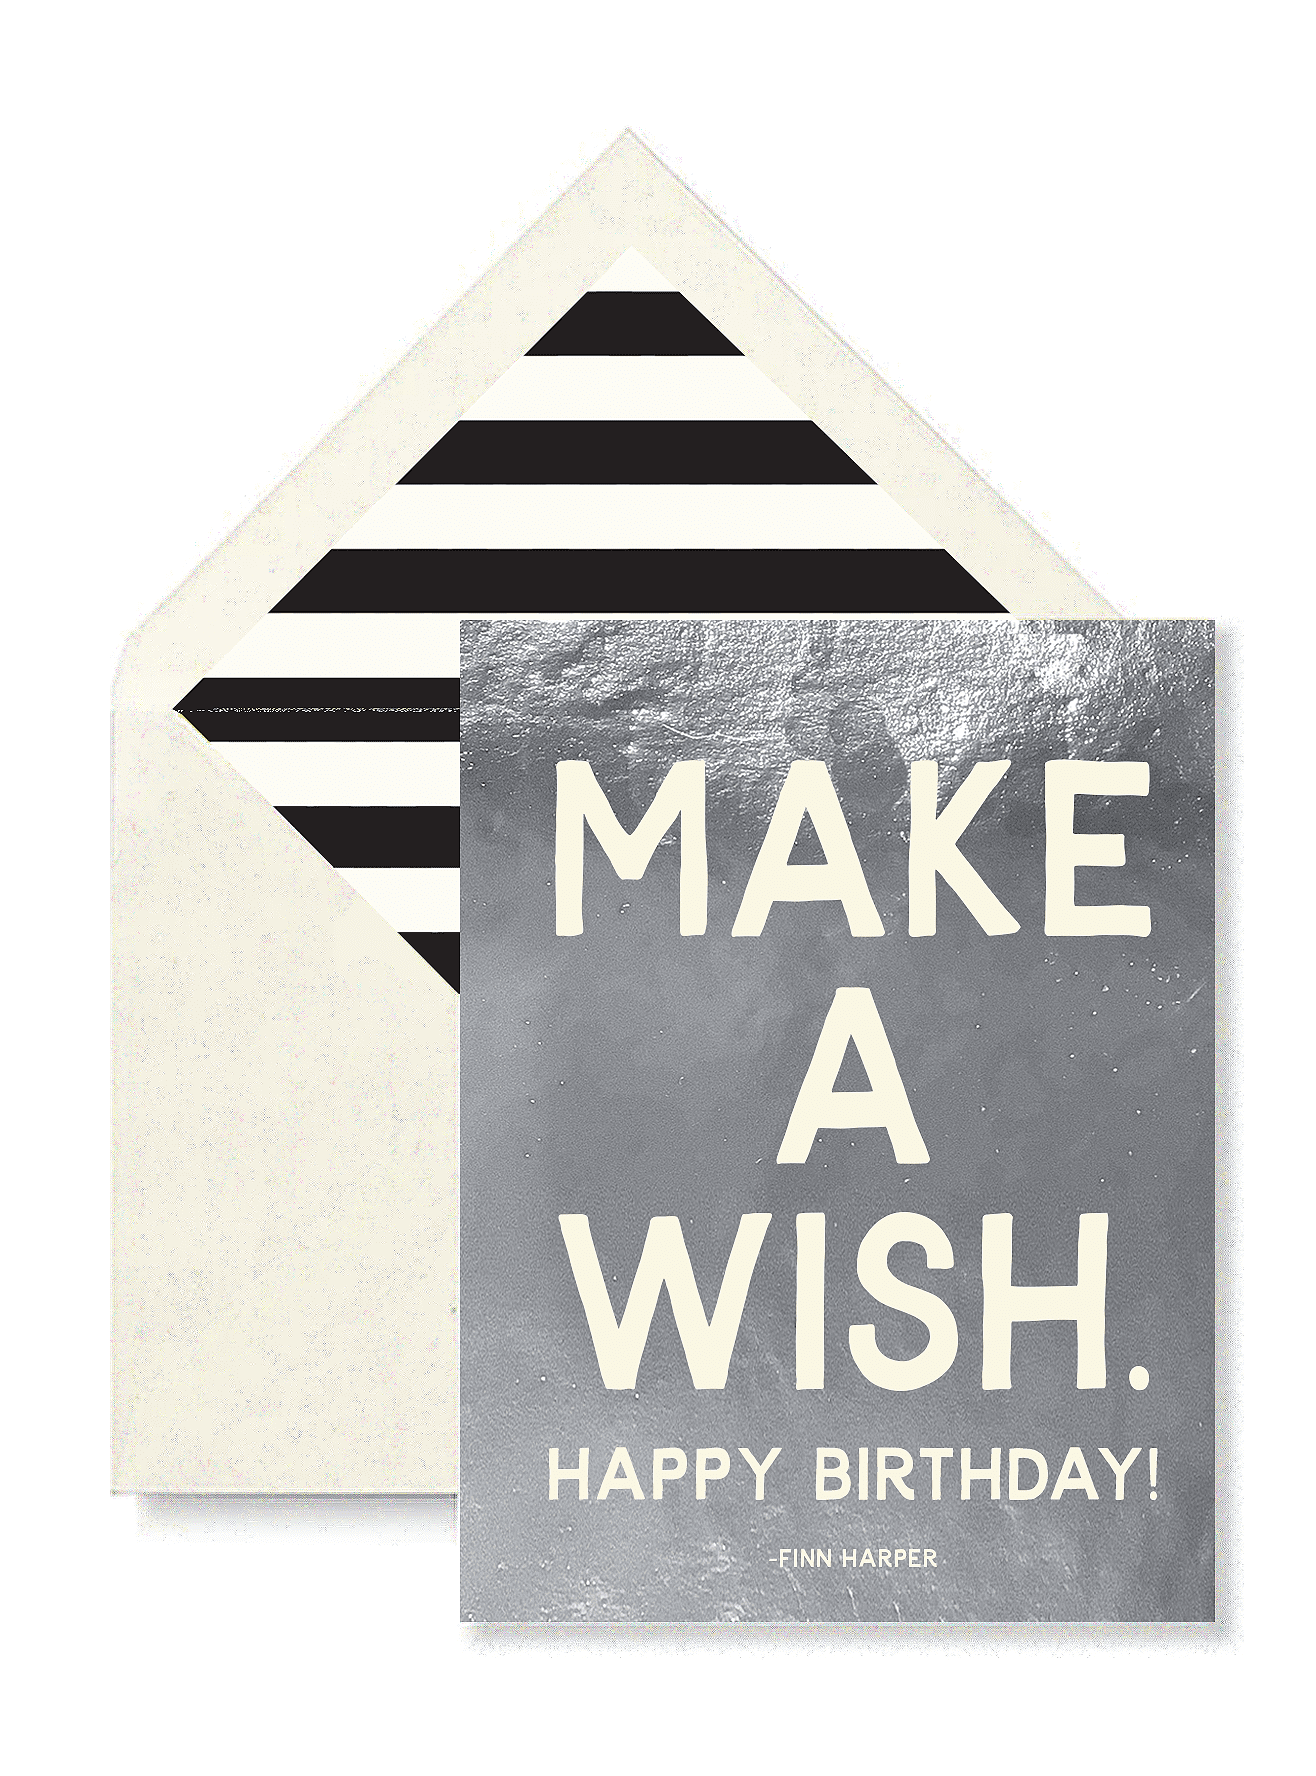 Bensgarden.com | Make A Wish Happy Birthday Greeting Card, Single Folded Card - Ben's Garden. Made in New York City.